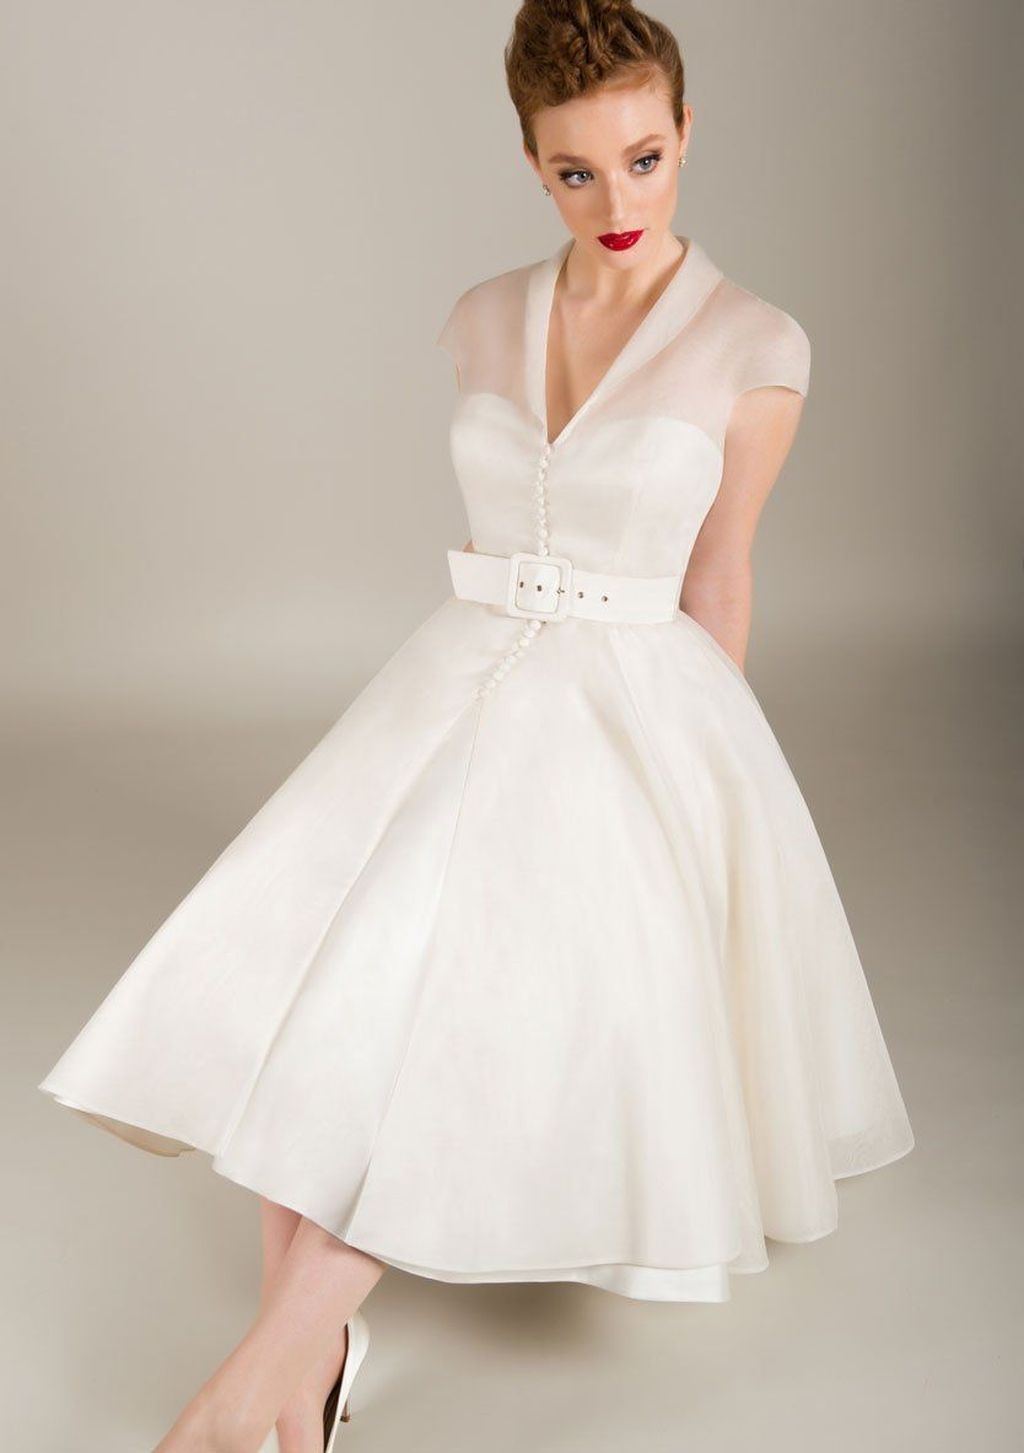 45 Gorgeous Tea Length Wedding Dresses Ideas - ADDICFASHION